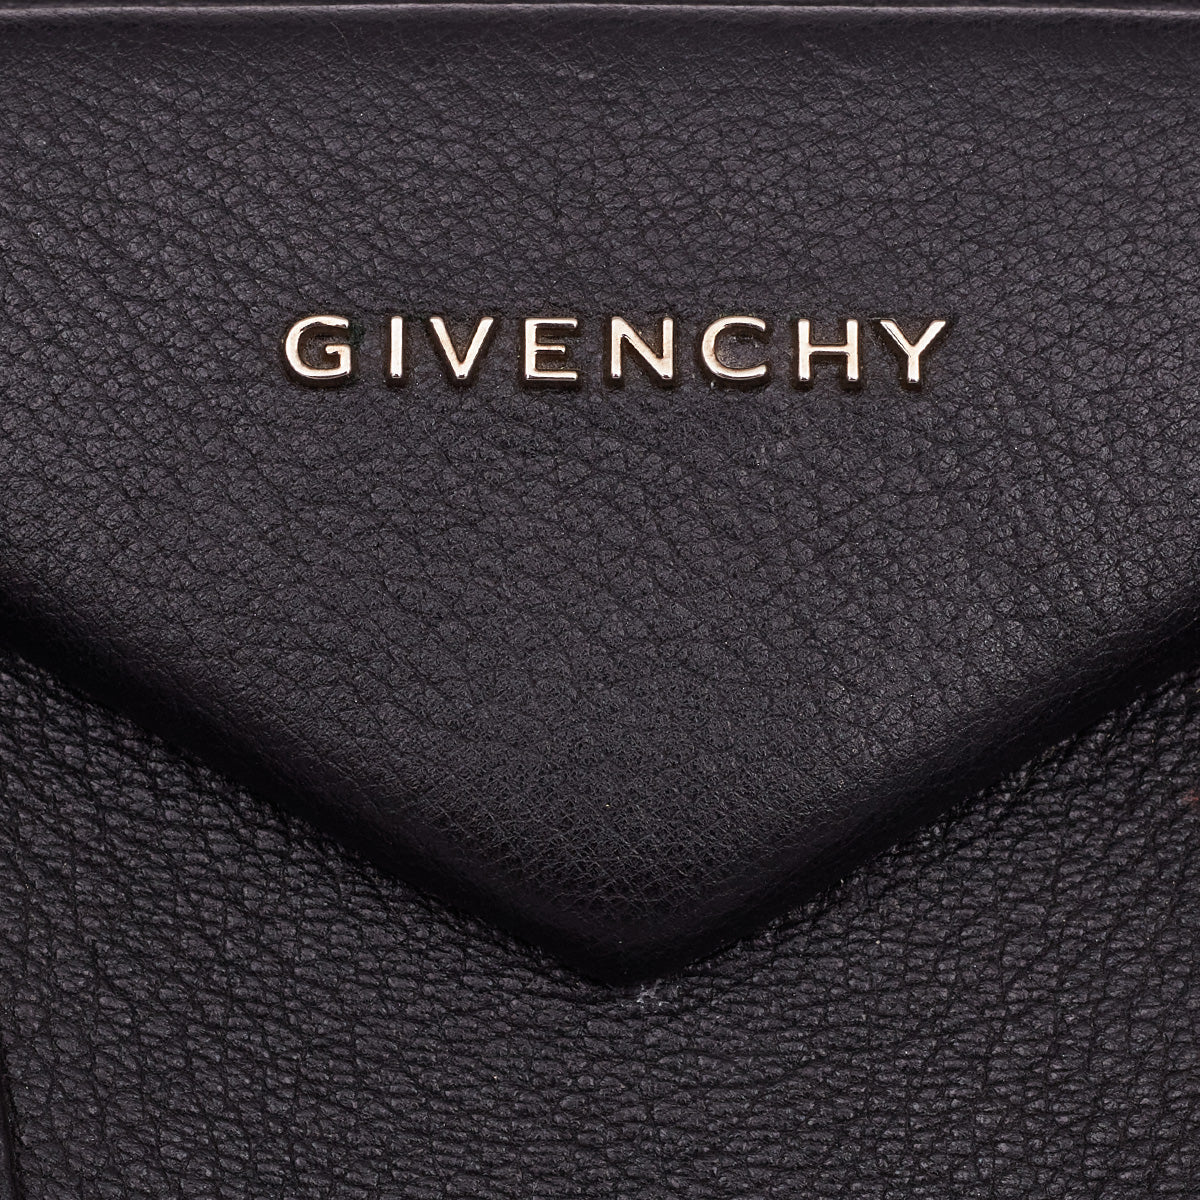 Bolsa Givenchy Antigona Preta